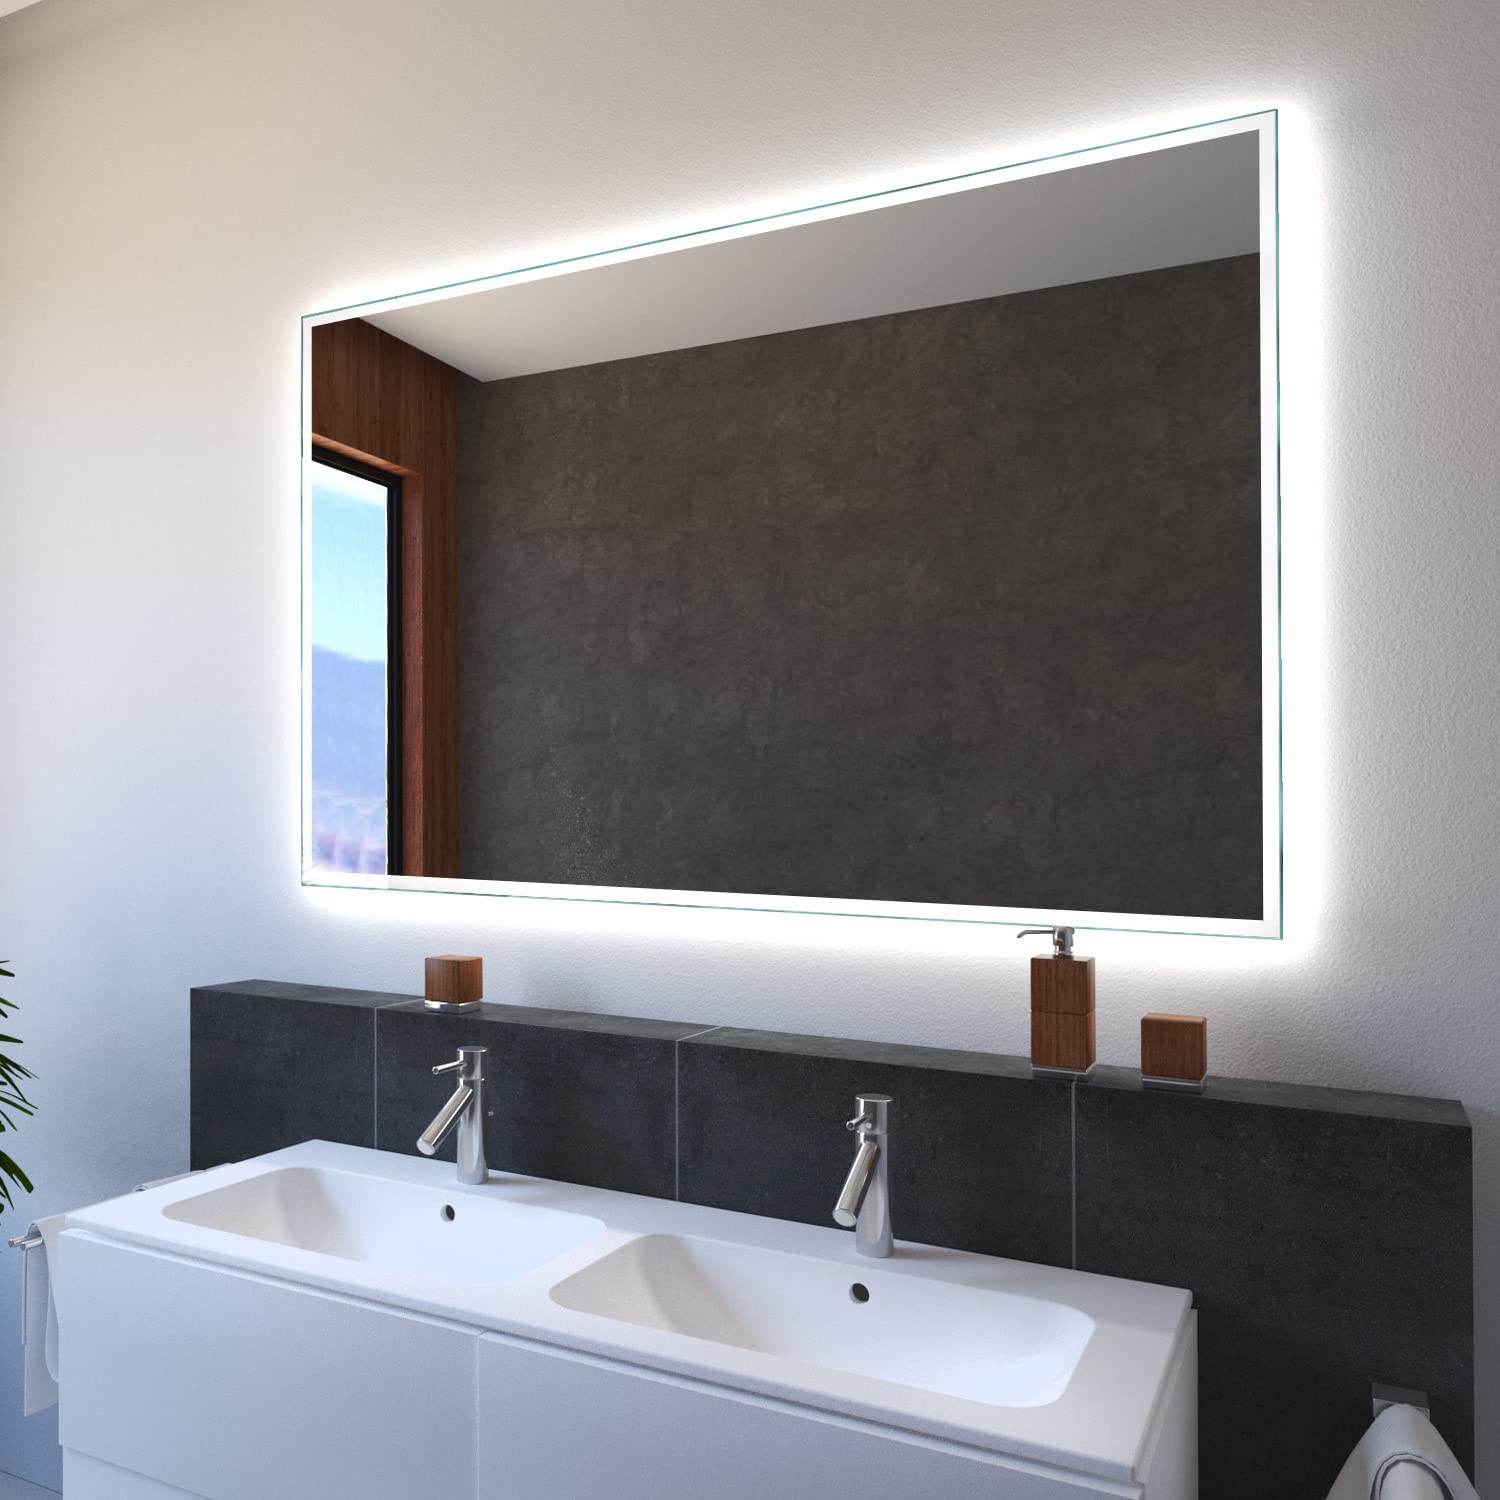 SARAR Wandspiegel mit schmaler rundum LED-Beleuchtung 120x70cm Made in Germany Designo MA4111 Badspiegel Spiegel mit Beleuchtung Badezimmerspiegel nach-auf Maß